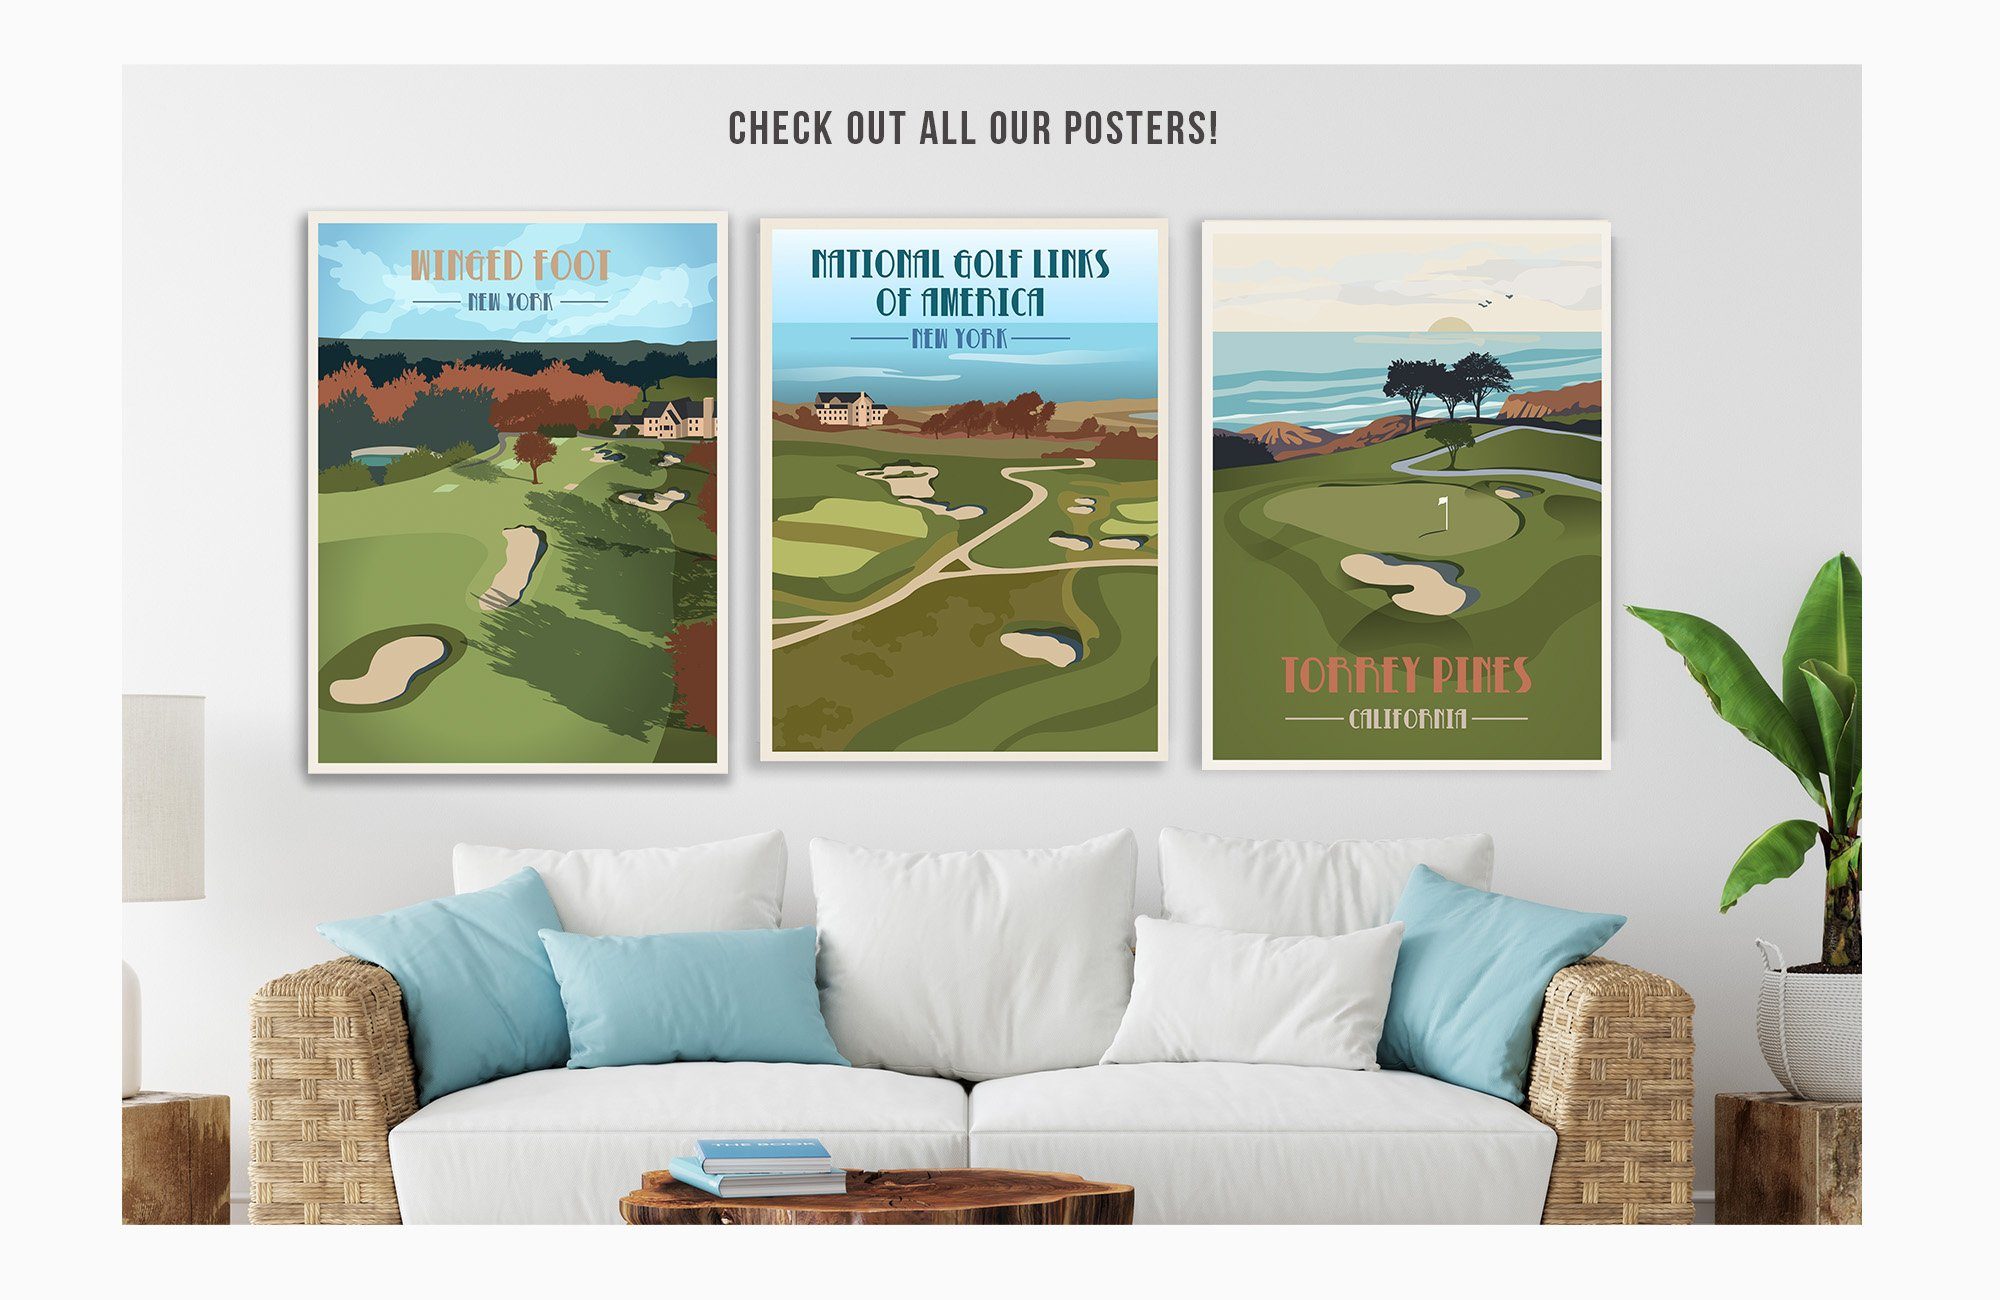 National Golf Links of America Poster, New York, Golf Clubs of America, Unframed Map World Vibe Studio 